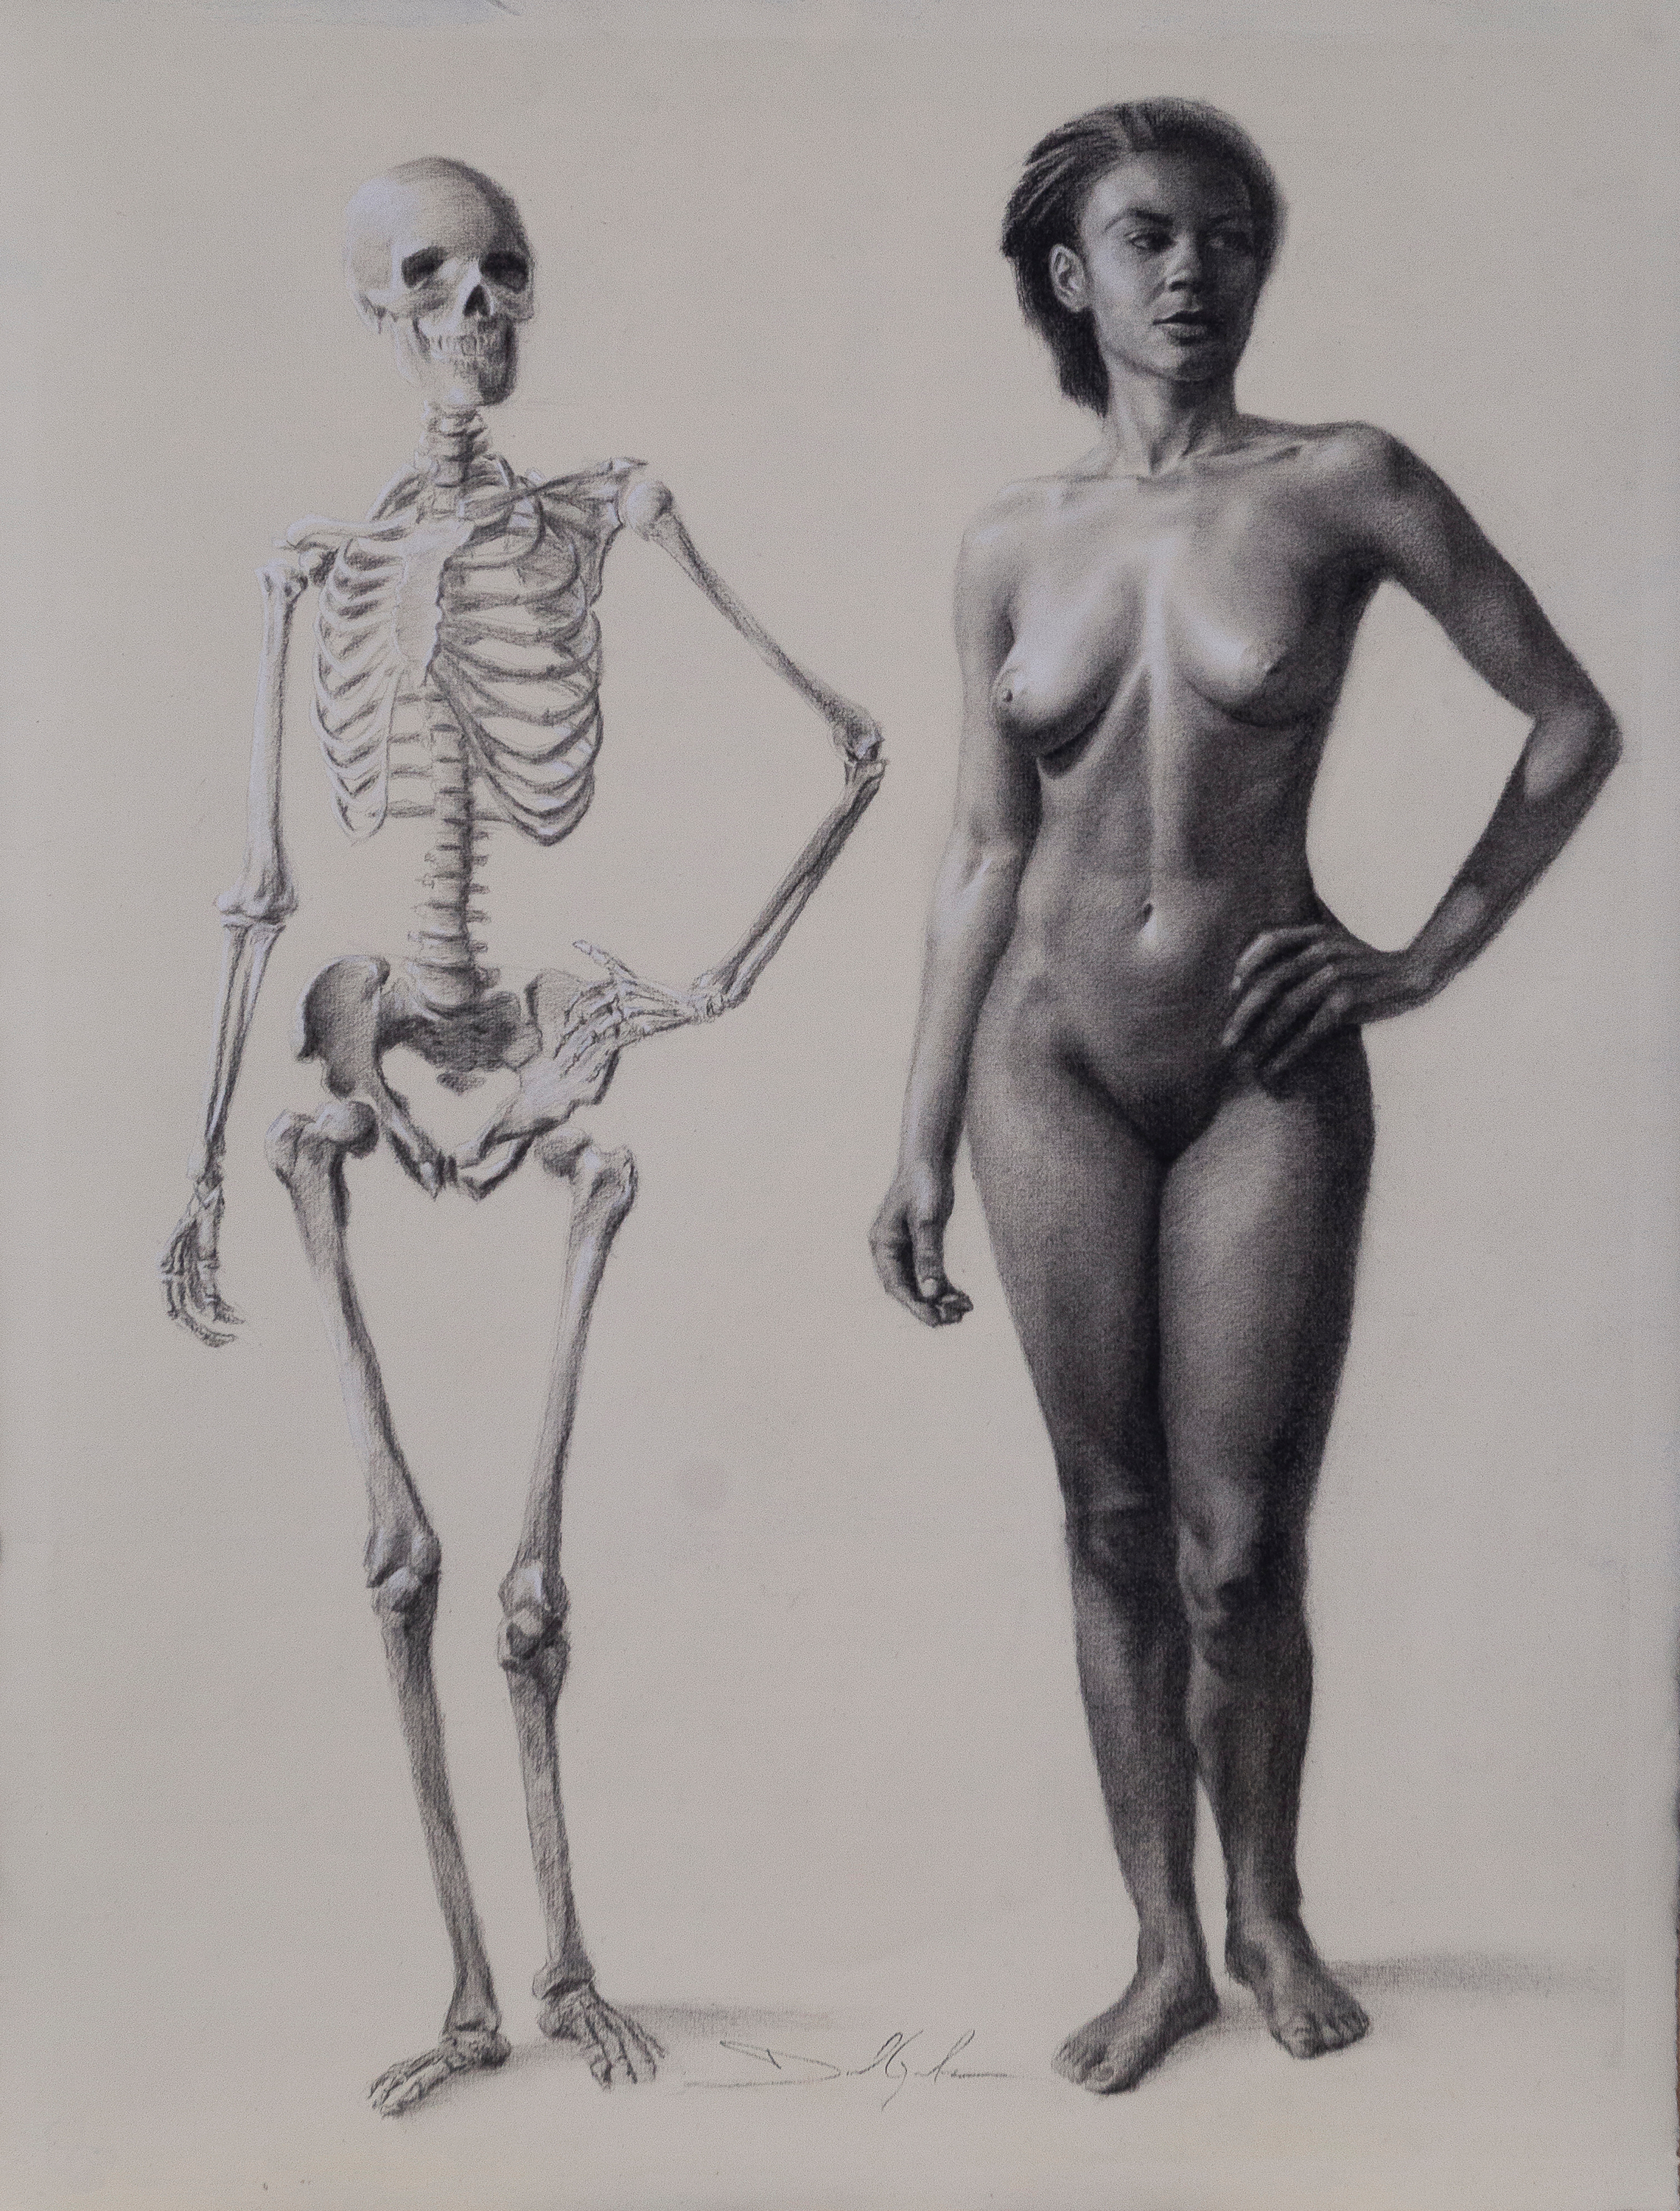 D.g academic anatomy figure skeleton warehouse original 19x25 0013 yrolif